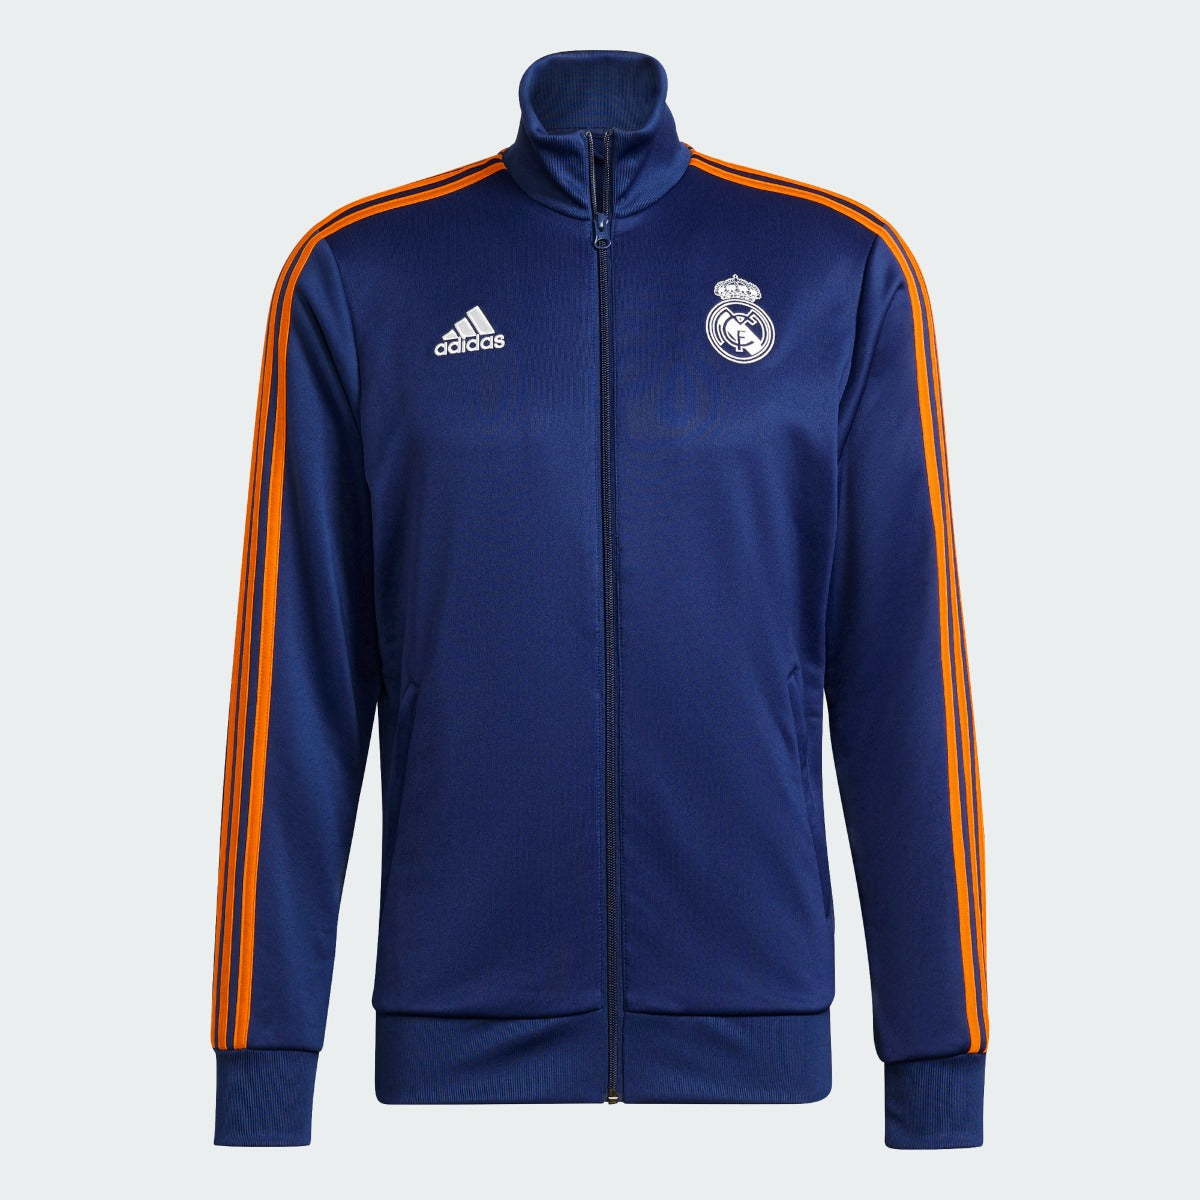 Adidas 2021-22 Real Madrid 3 Stripe Jacket - Navy-Orange (Front)